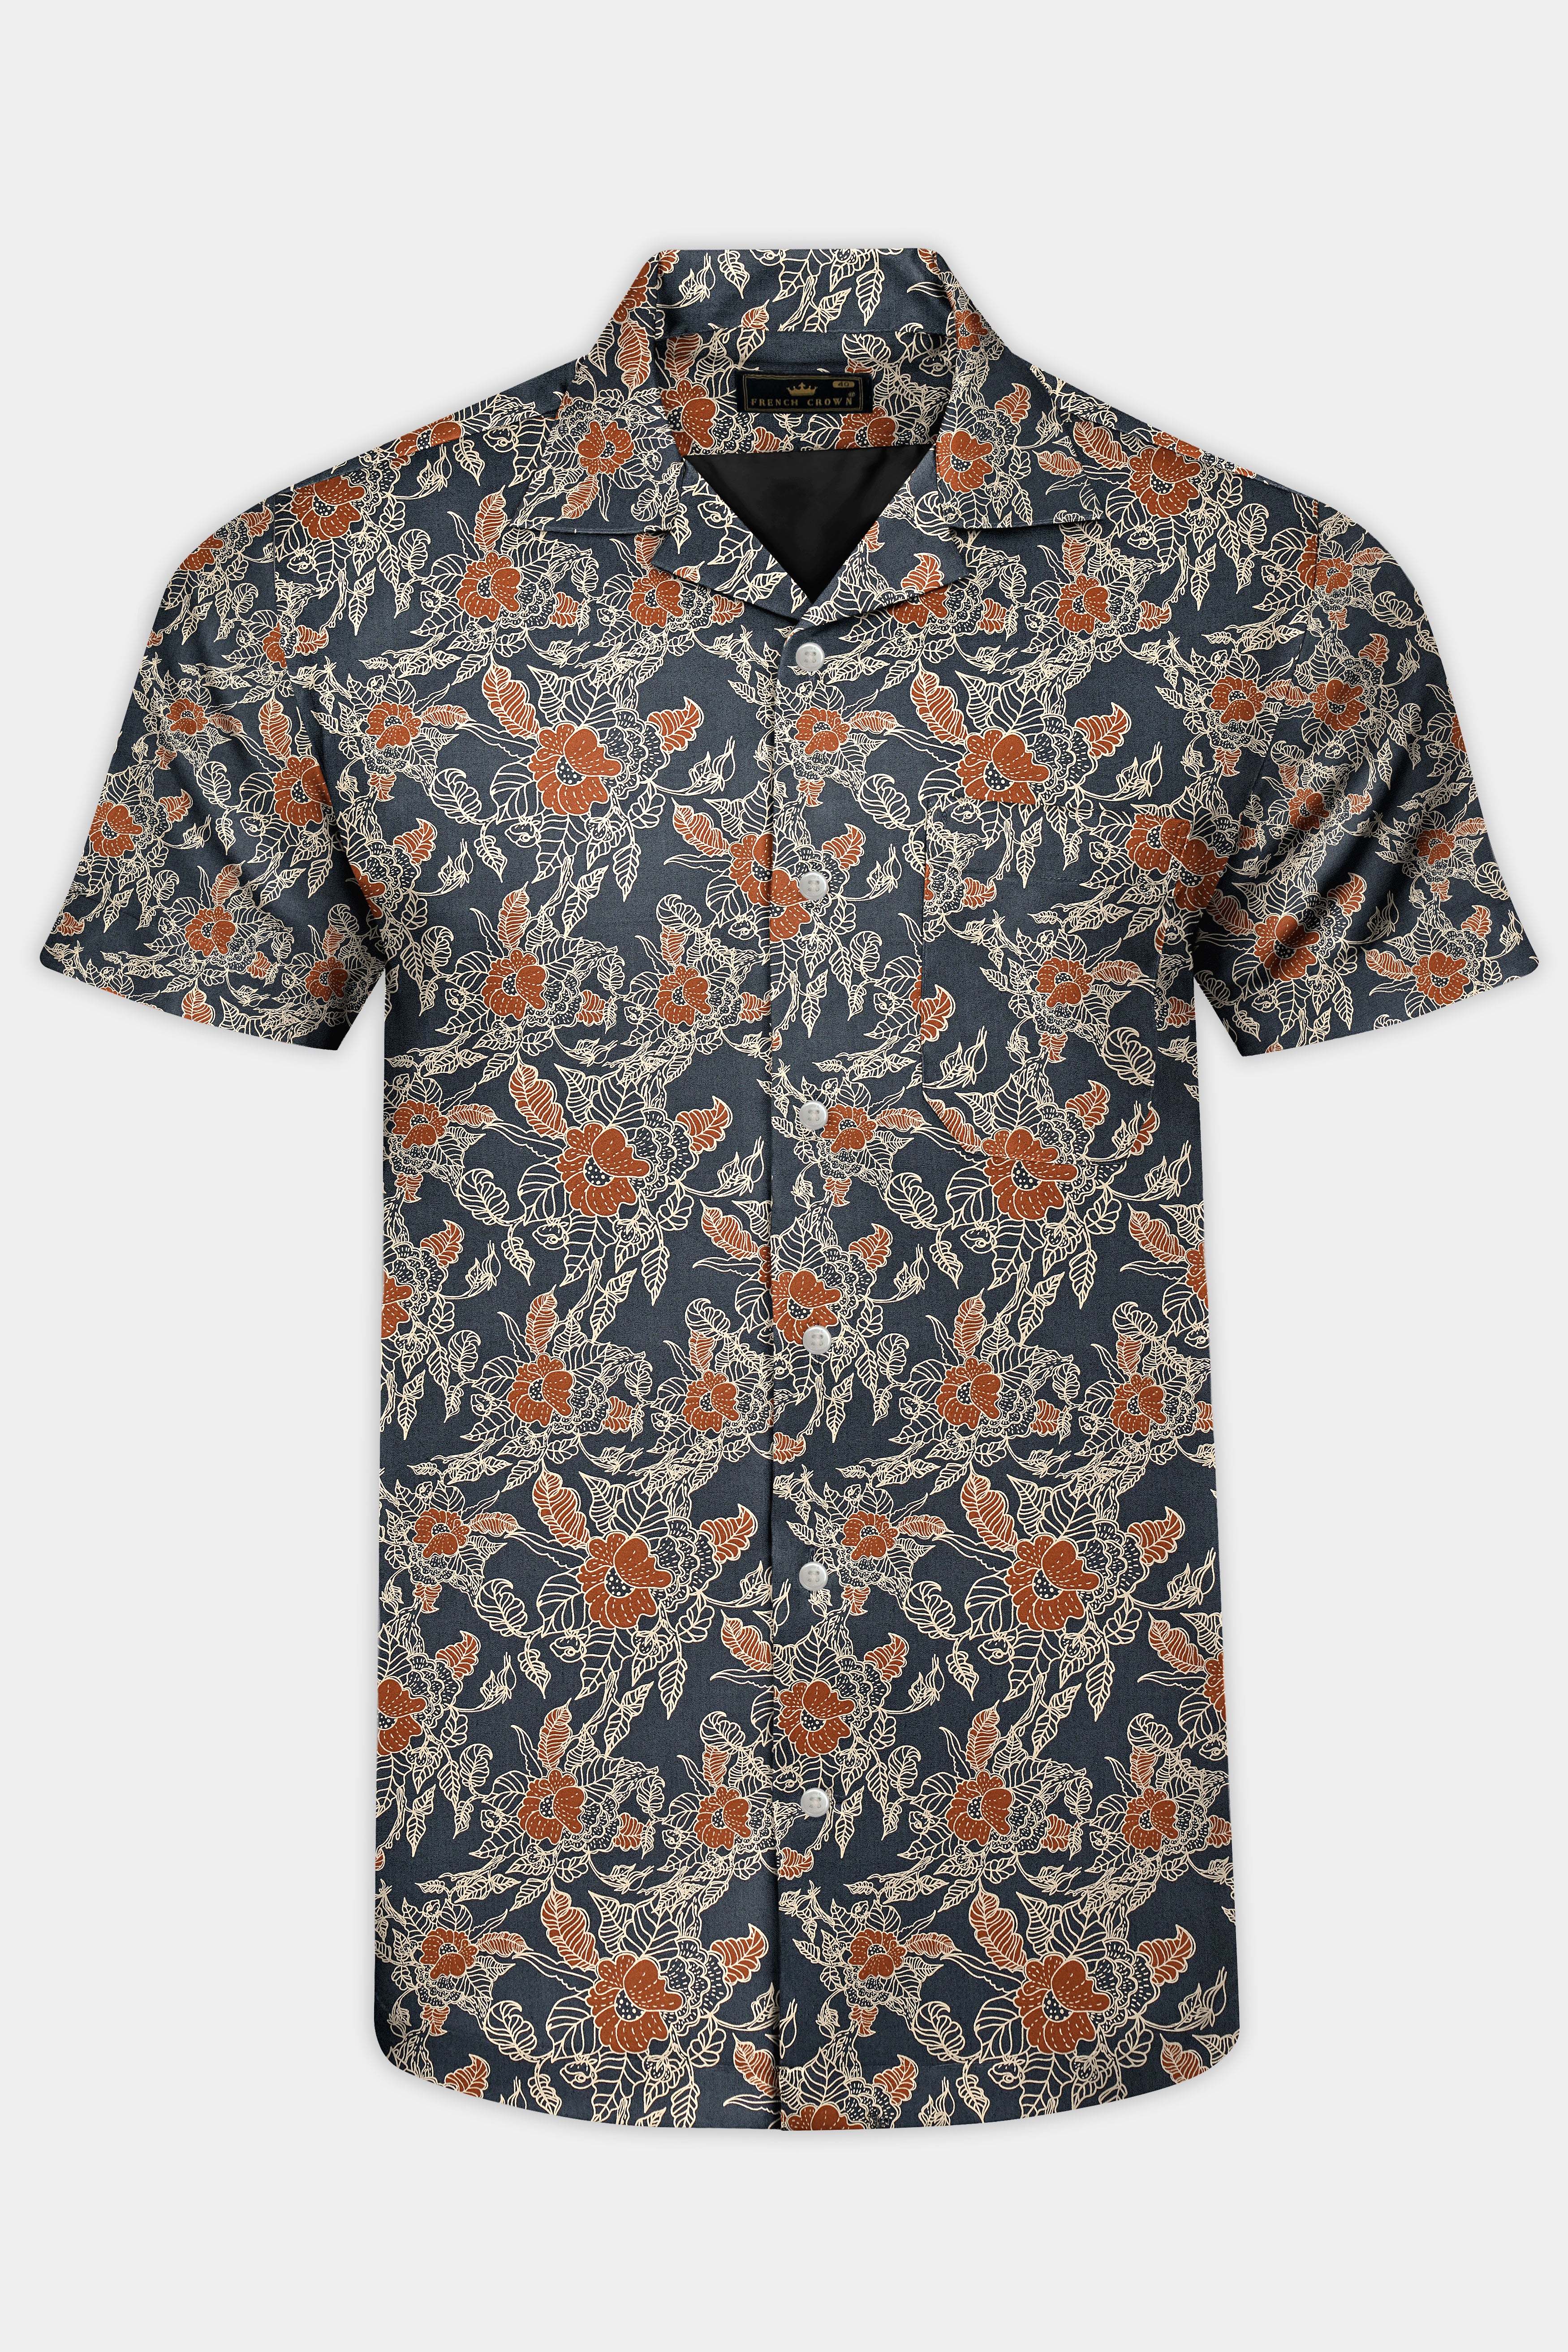 Iridium Gray Floral Printed Premium Cotton Shirt